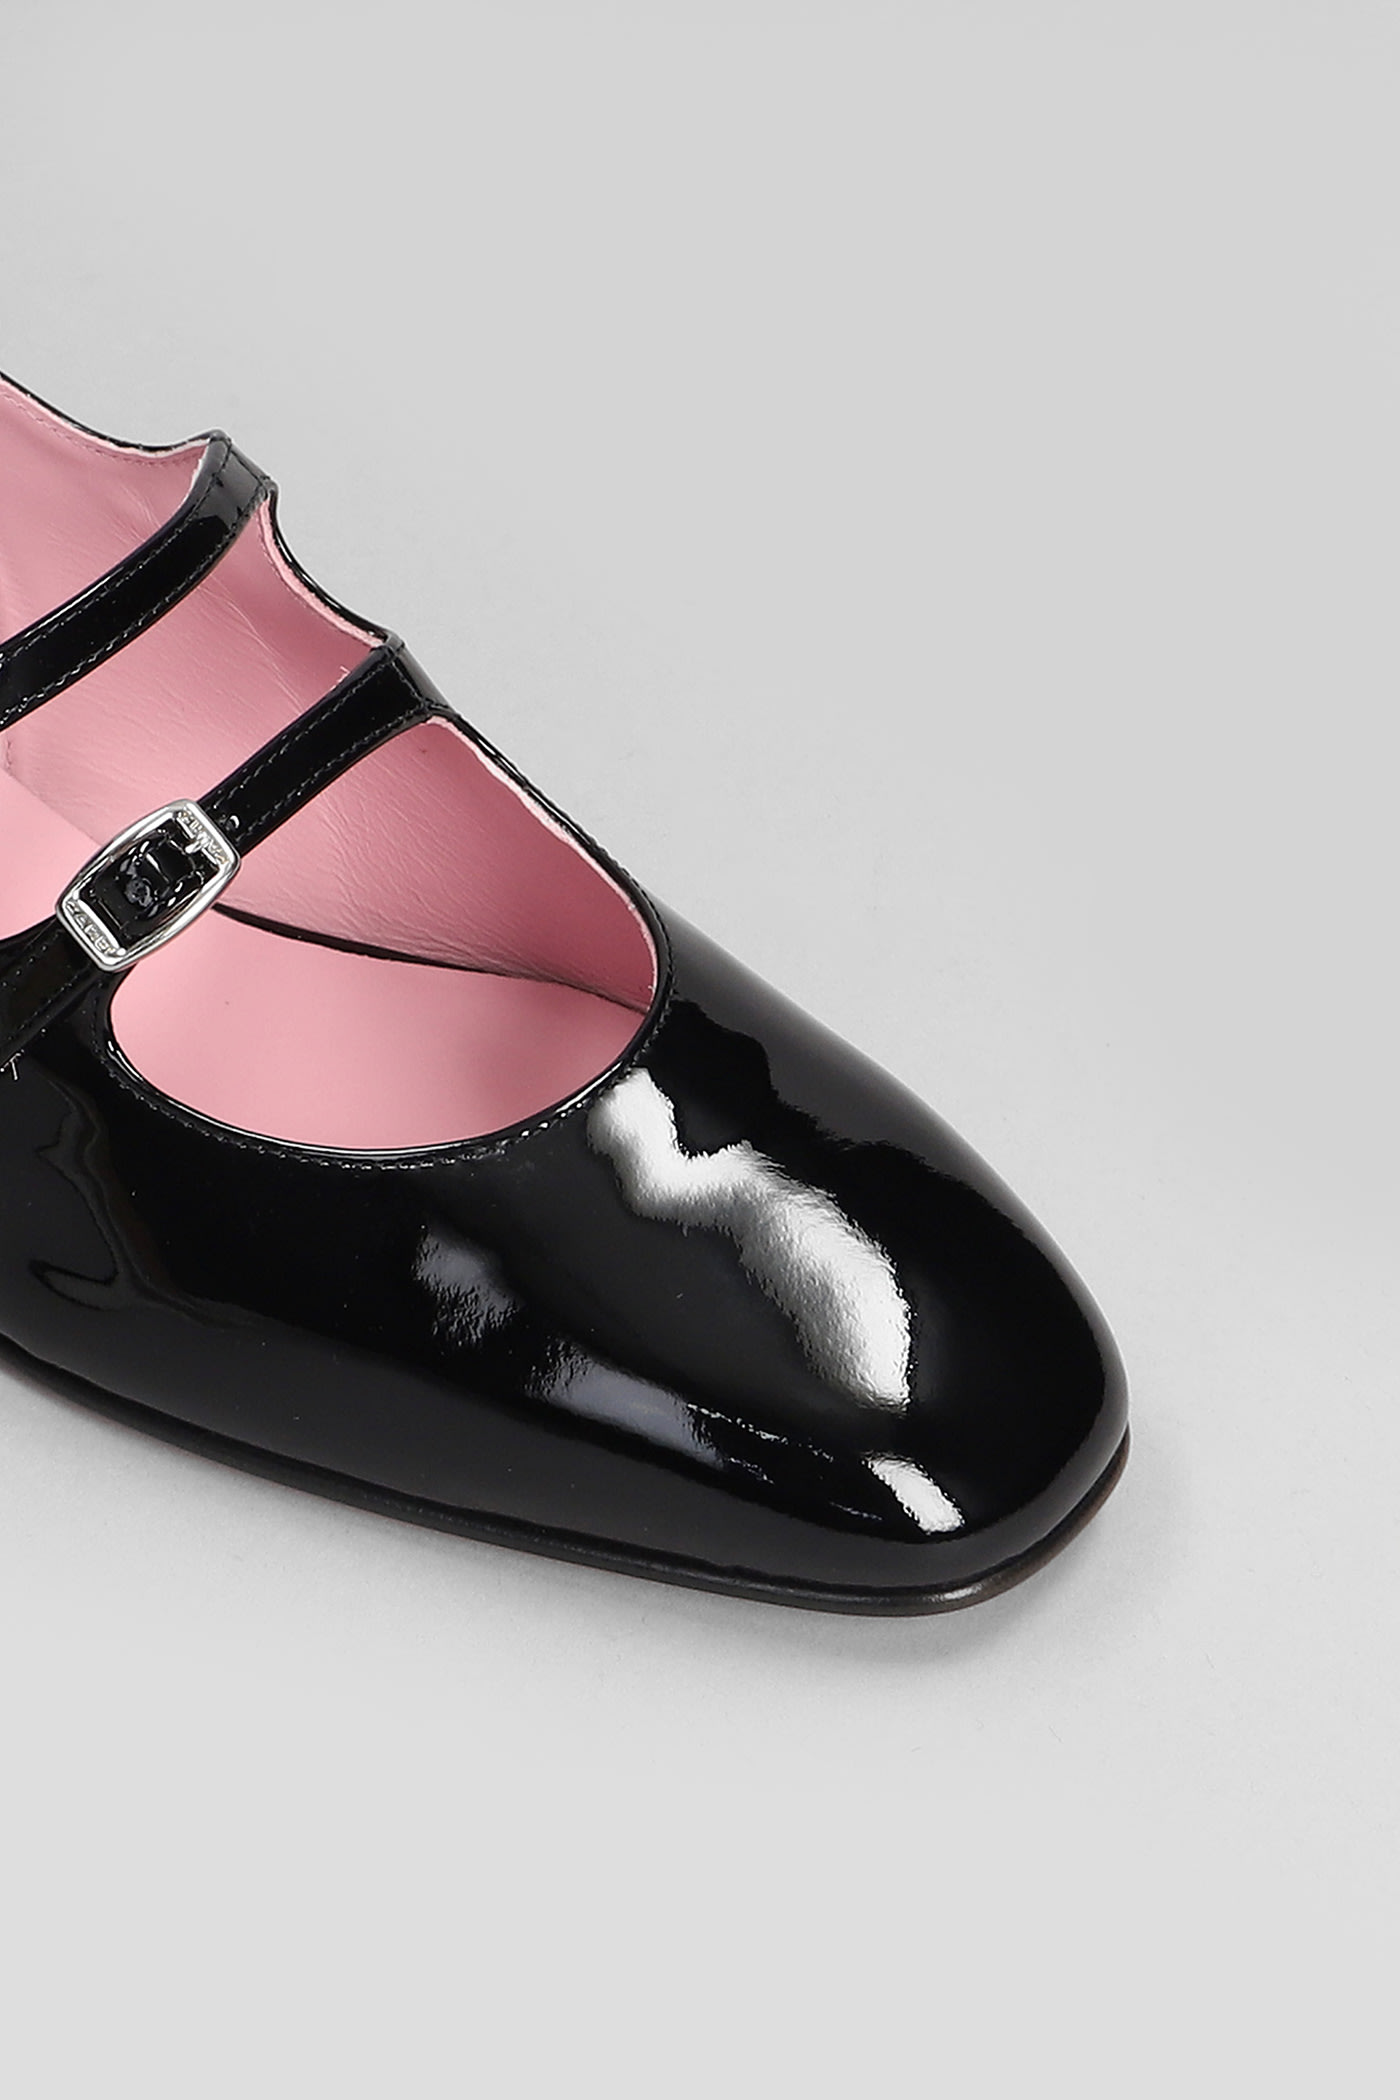 Shop Carel Peche Ballet Flats In Black Patent Leather